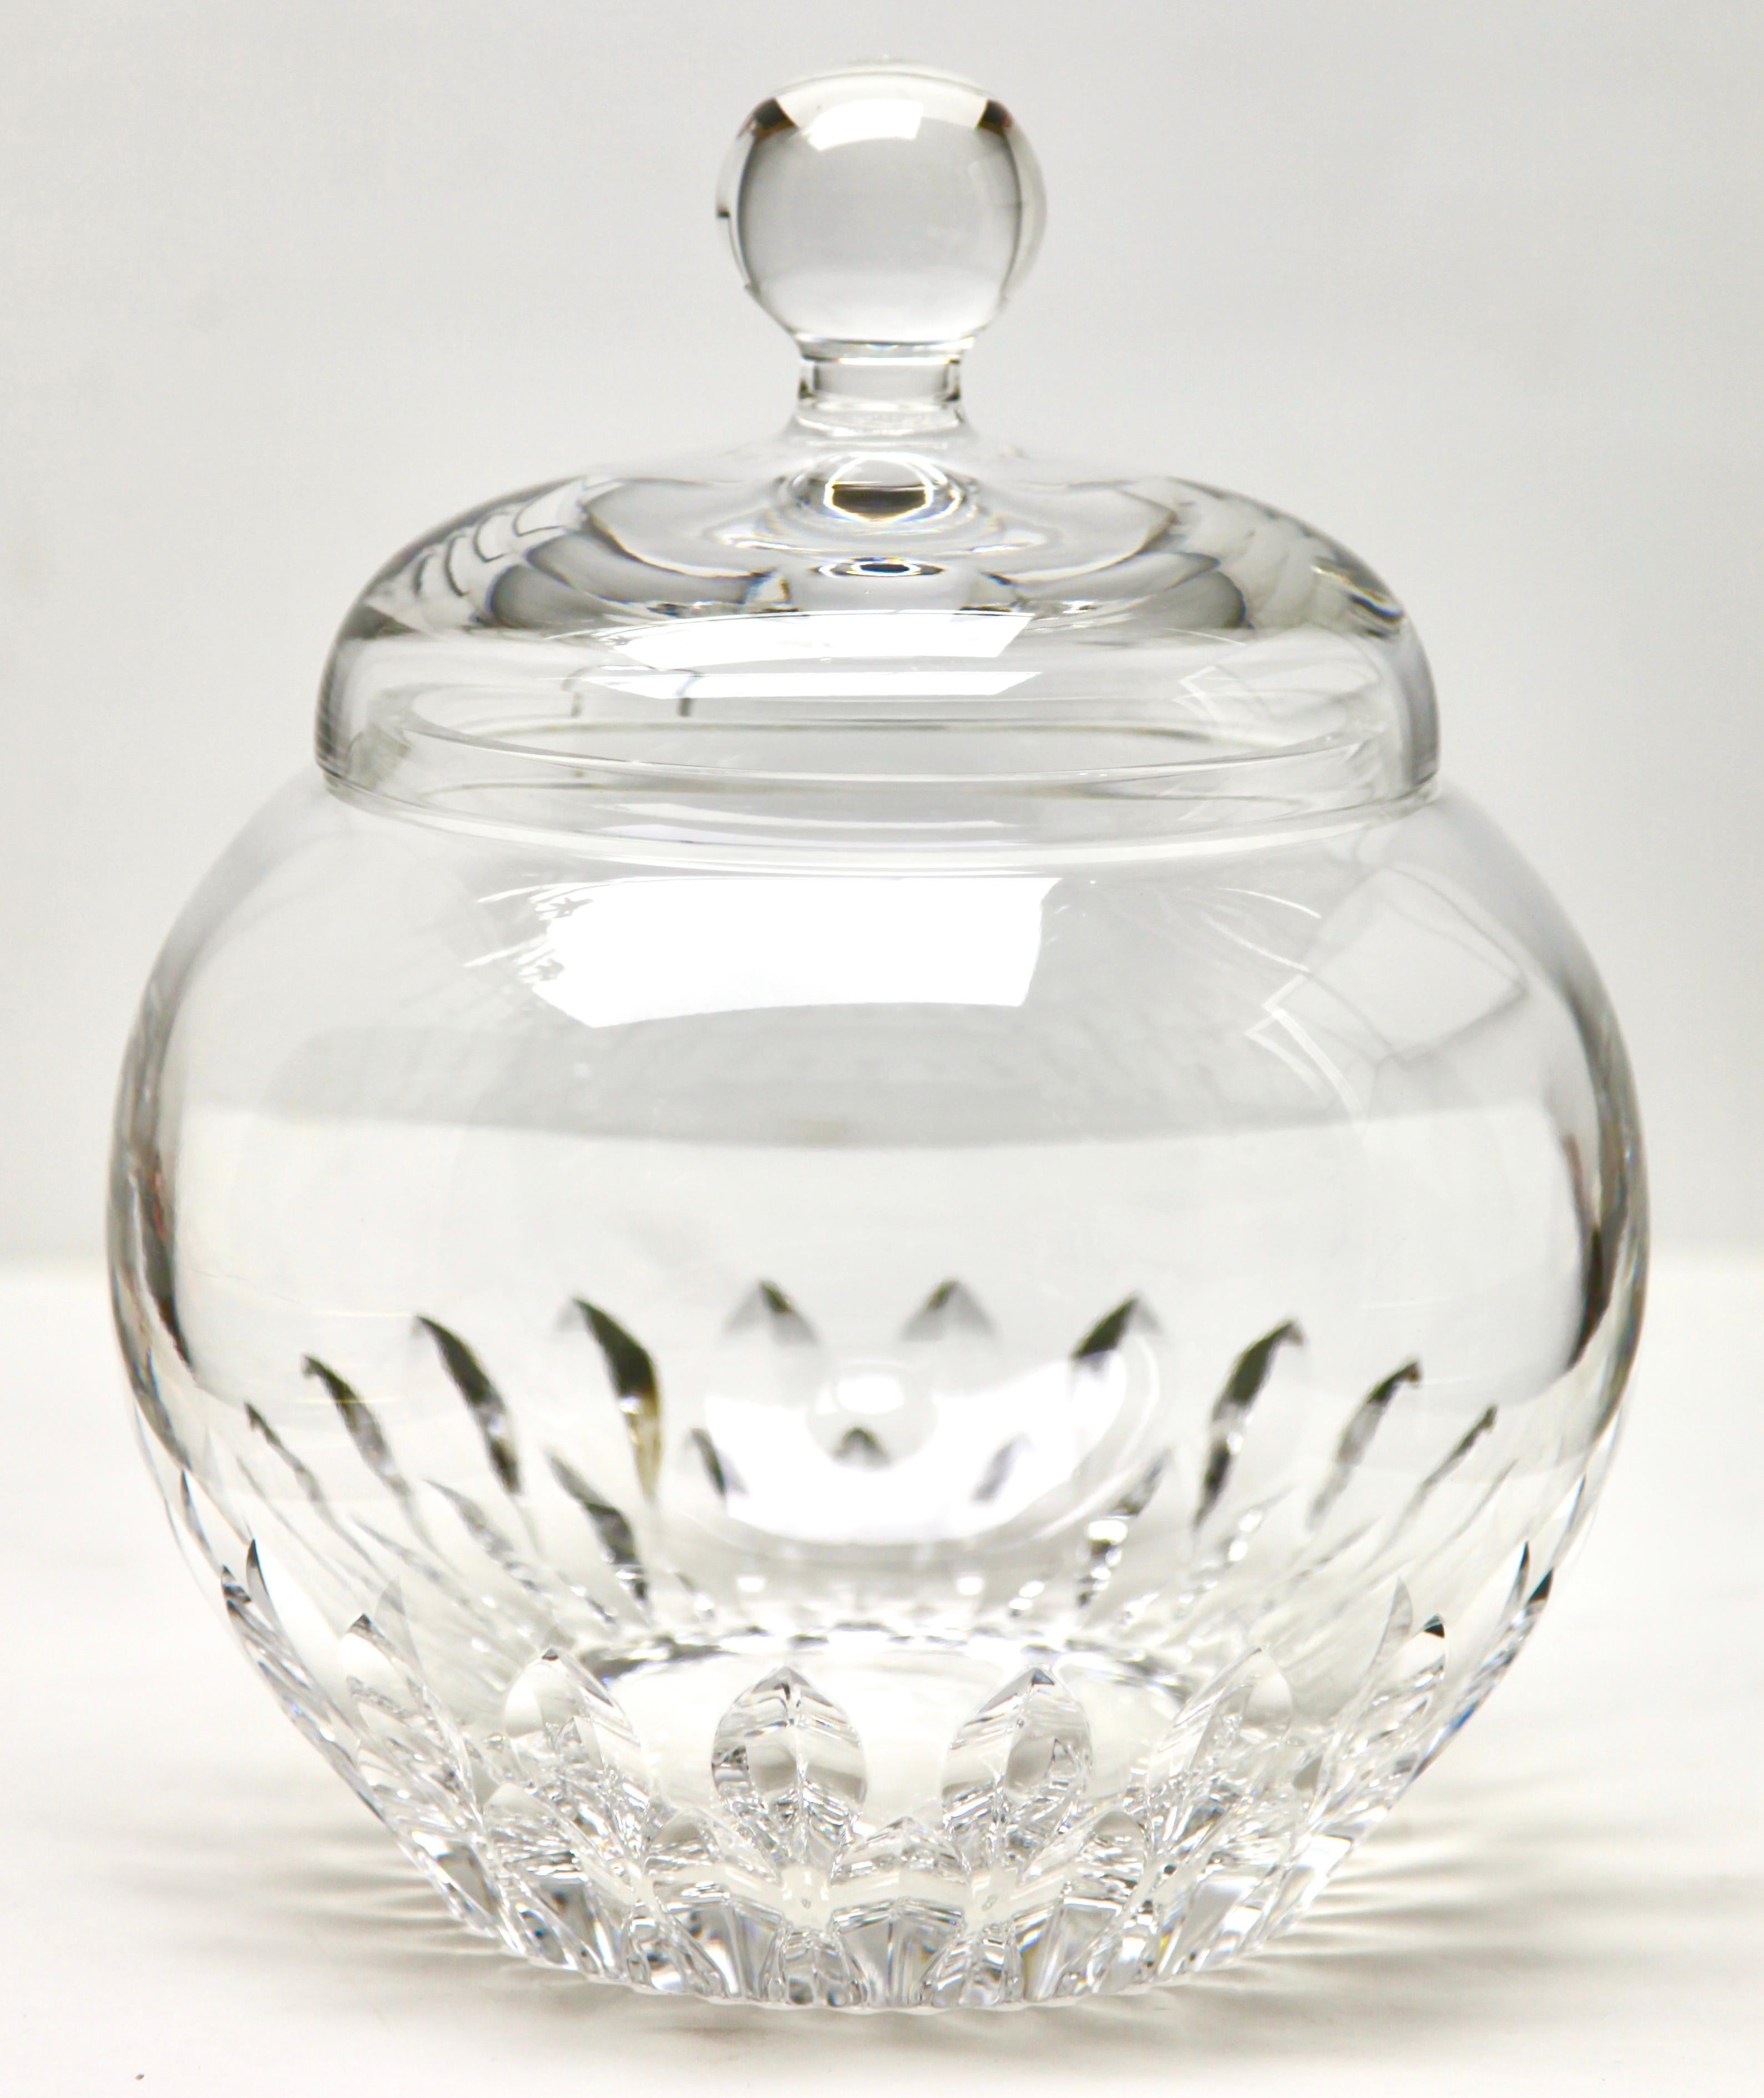 Cut clear crystal large punch bowl, Belgium

Measures: height 30 cm / 11.81 inch
Diameter 24 cm / 9.44 inch
Best Regards Geert.